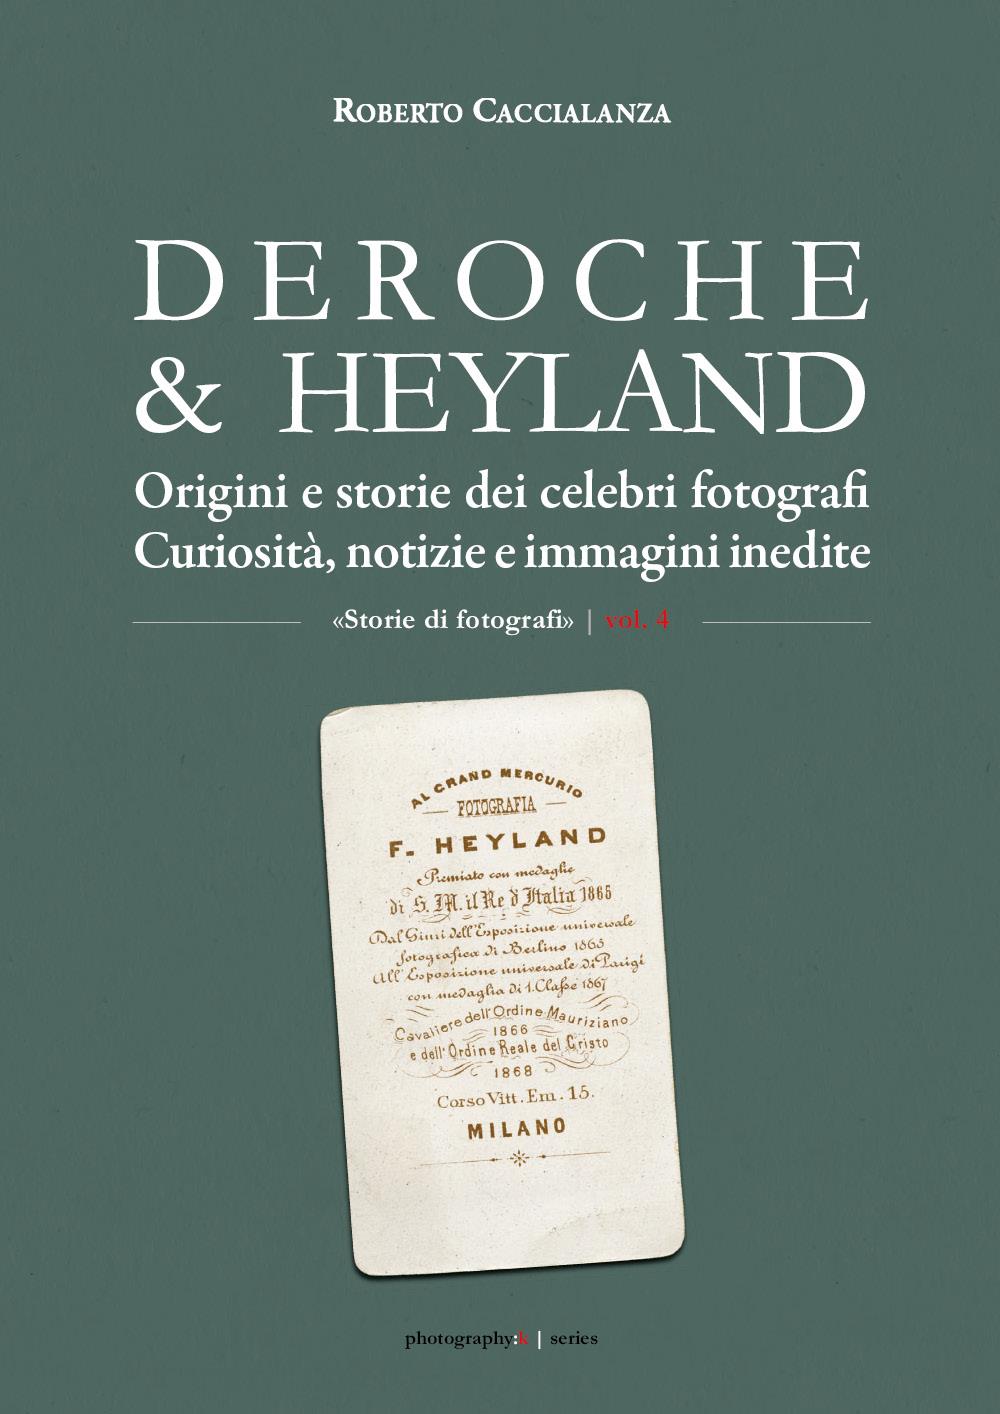 DEROCHE & HEYLAND. Origini e storie dei celebri fotografi. Curiosità, notizie e immagini inedite